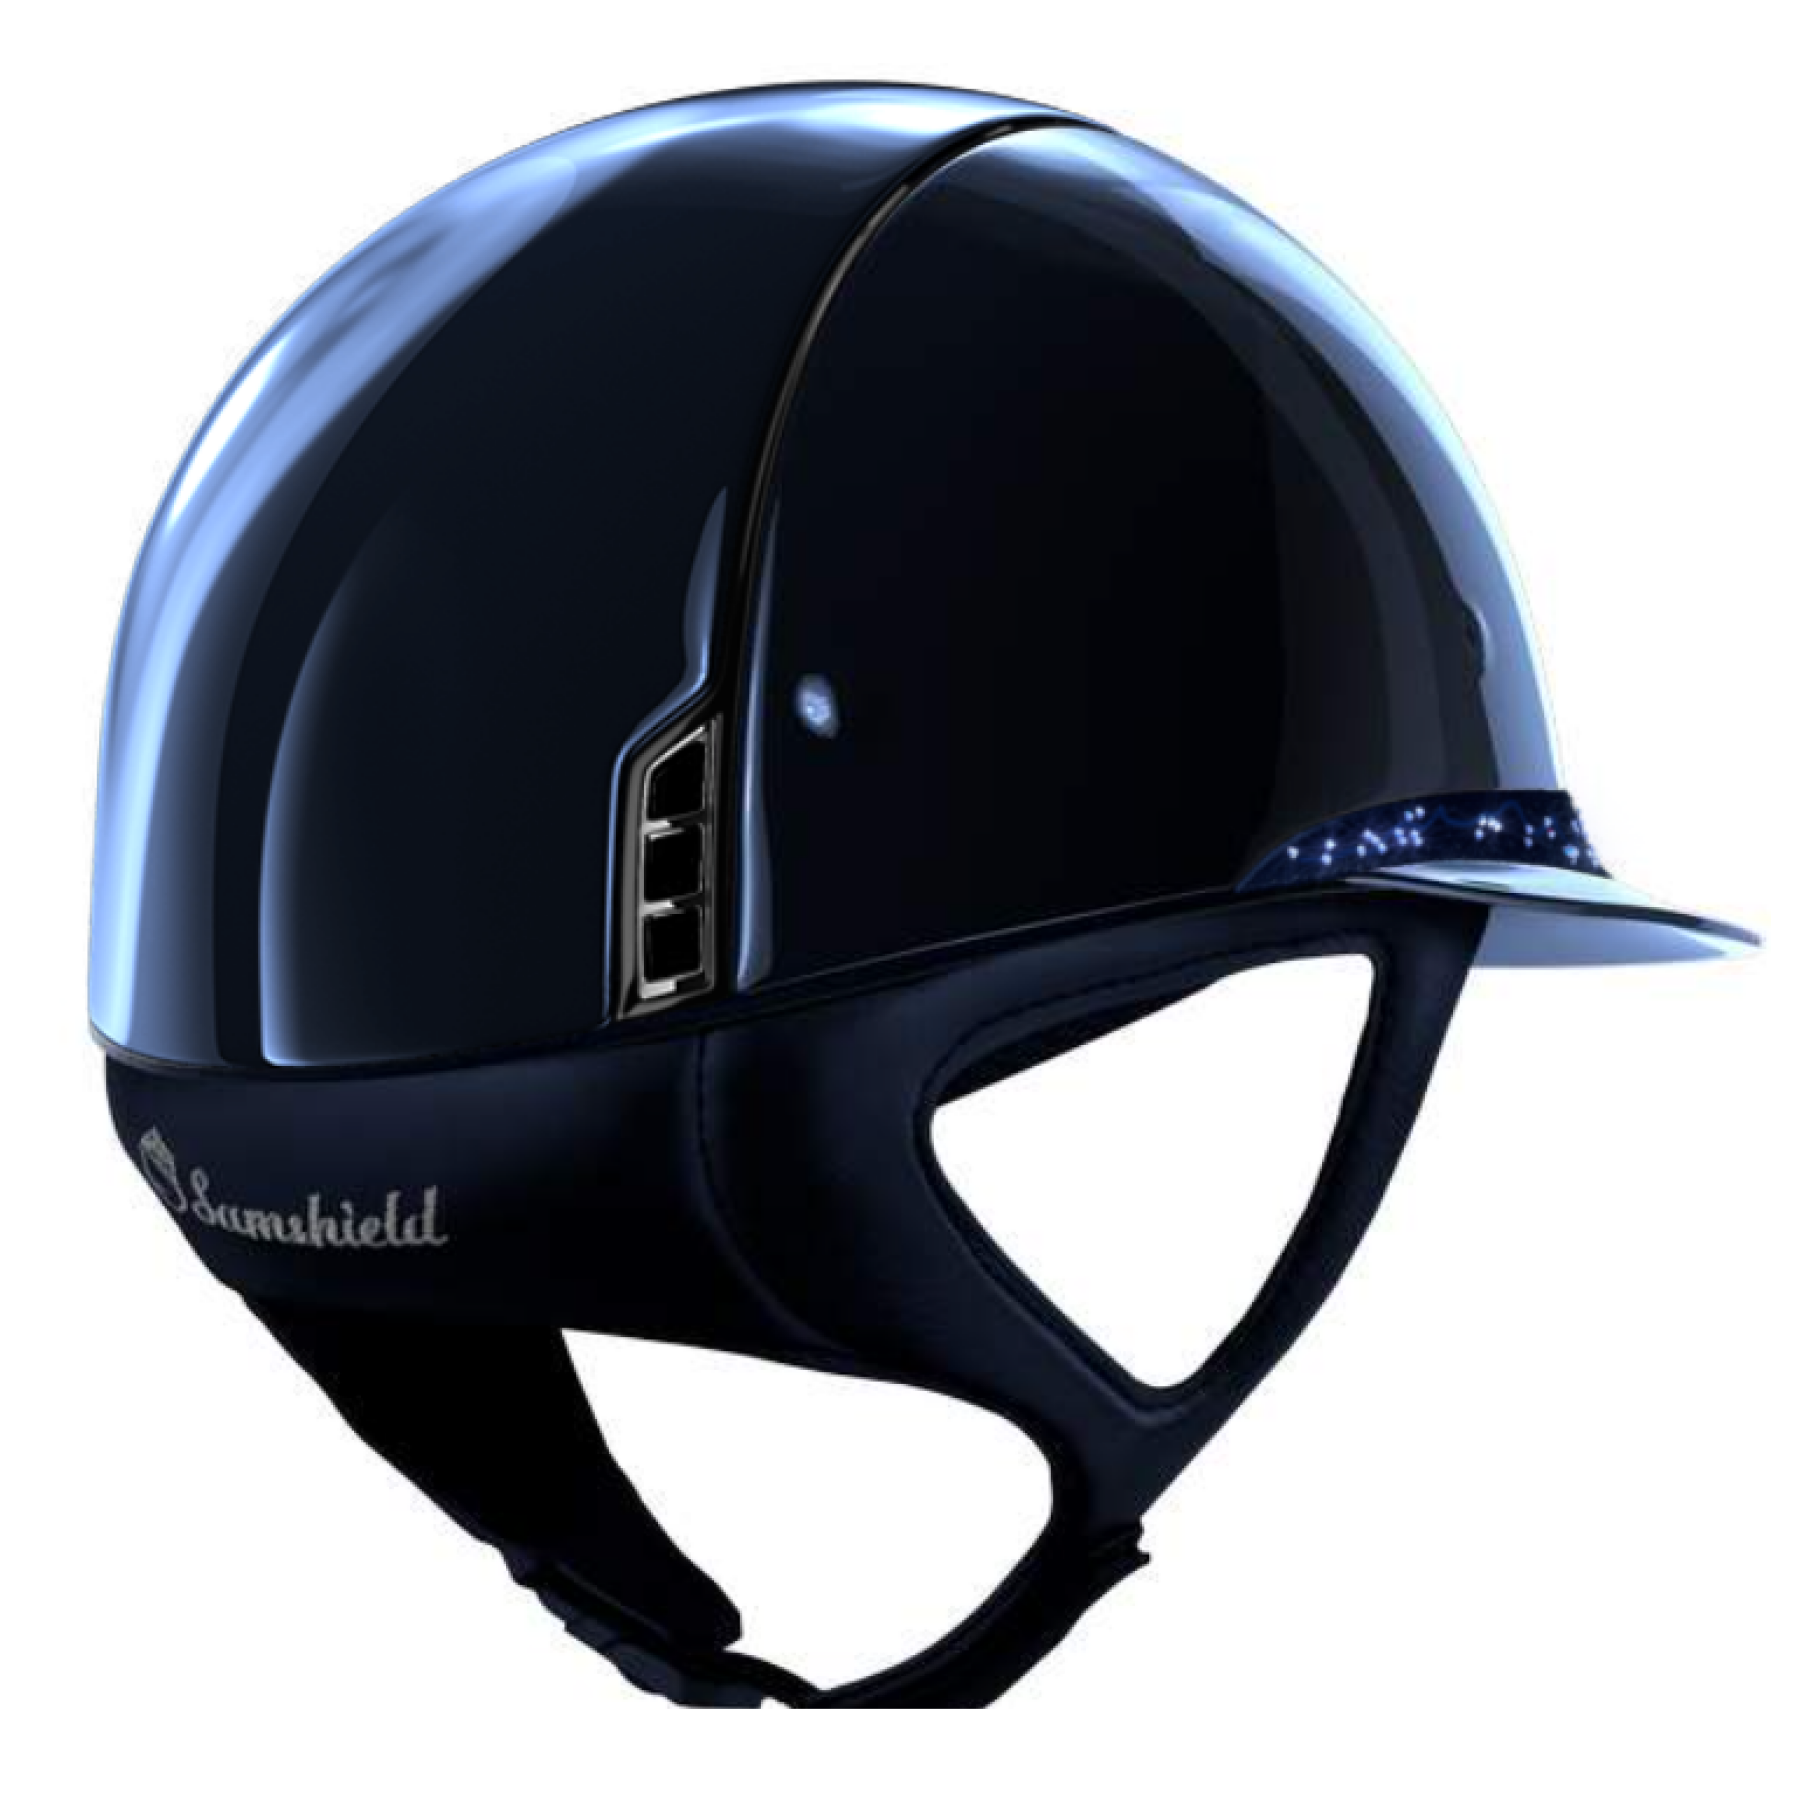 Configurable riding helmet Samshield Shadow Glossy Crystal Leaf